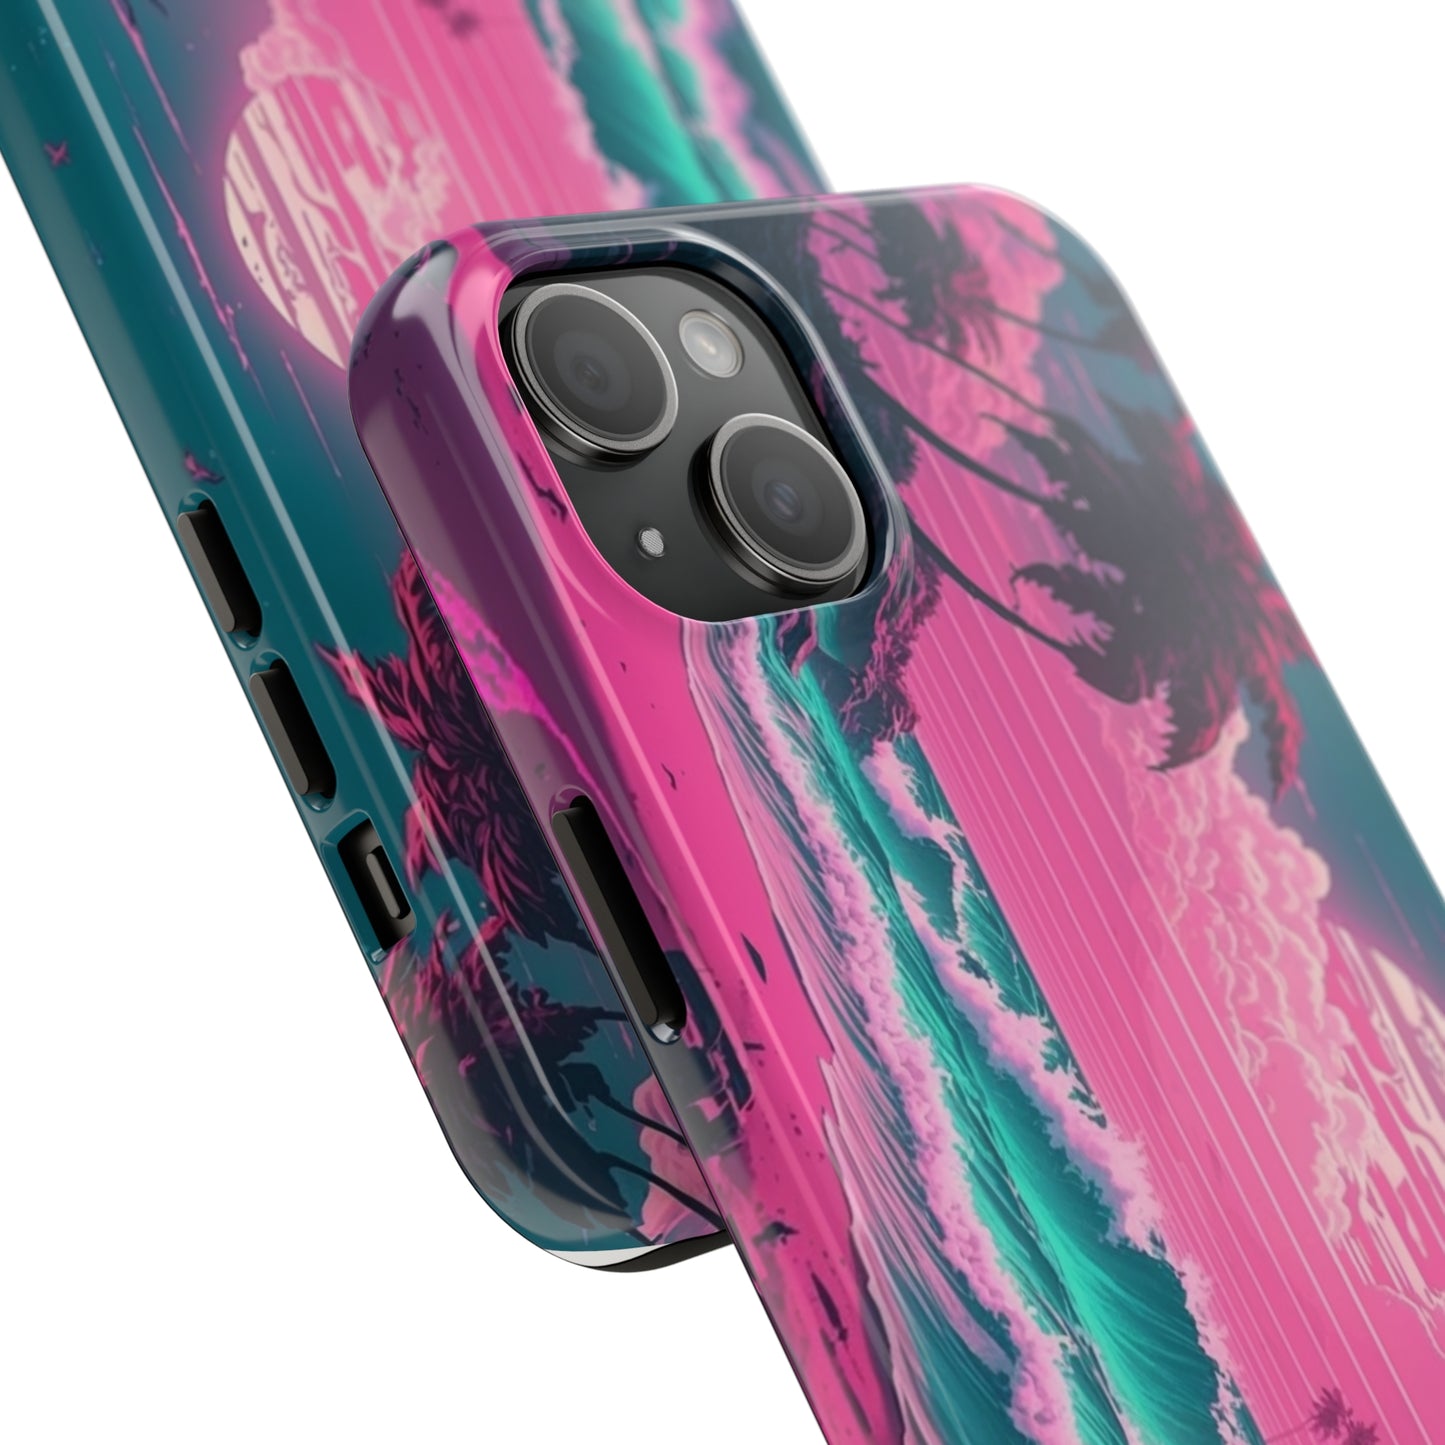 Vaporwave Beach Tough iPhone Case